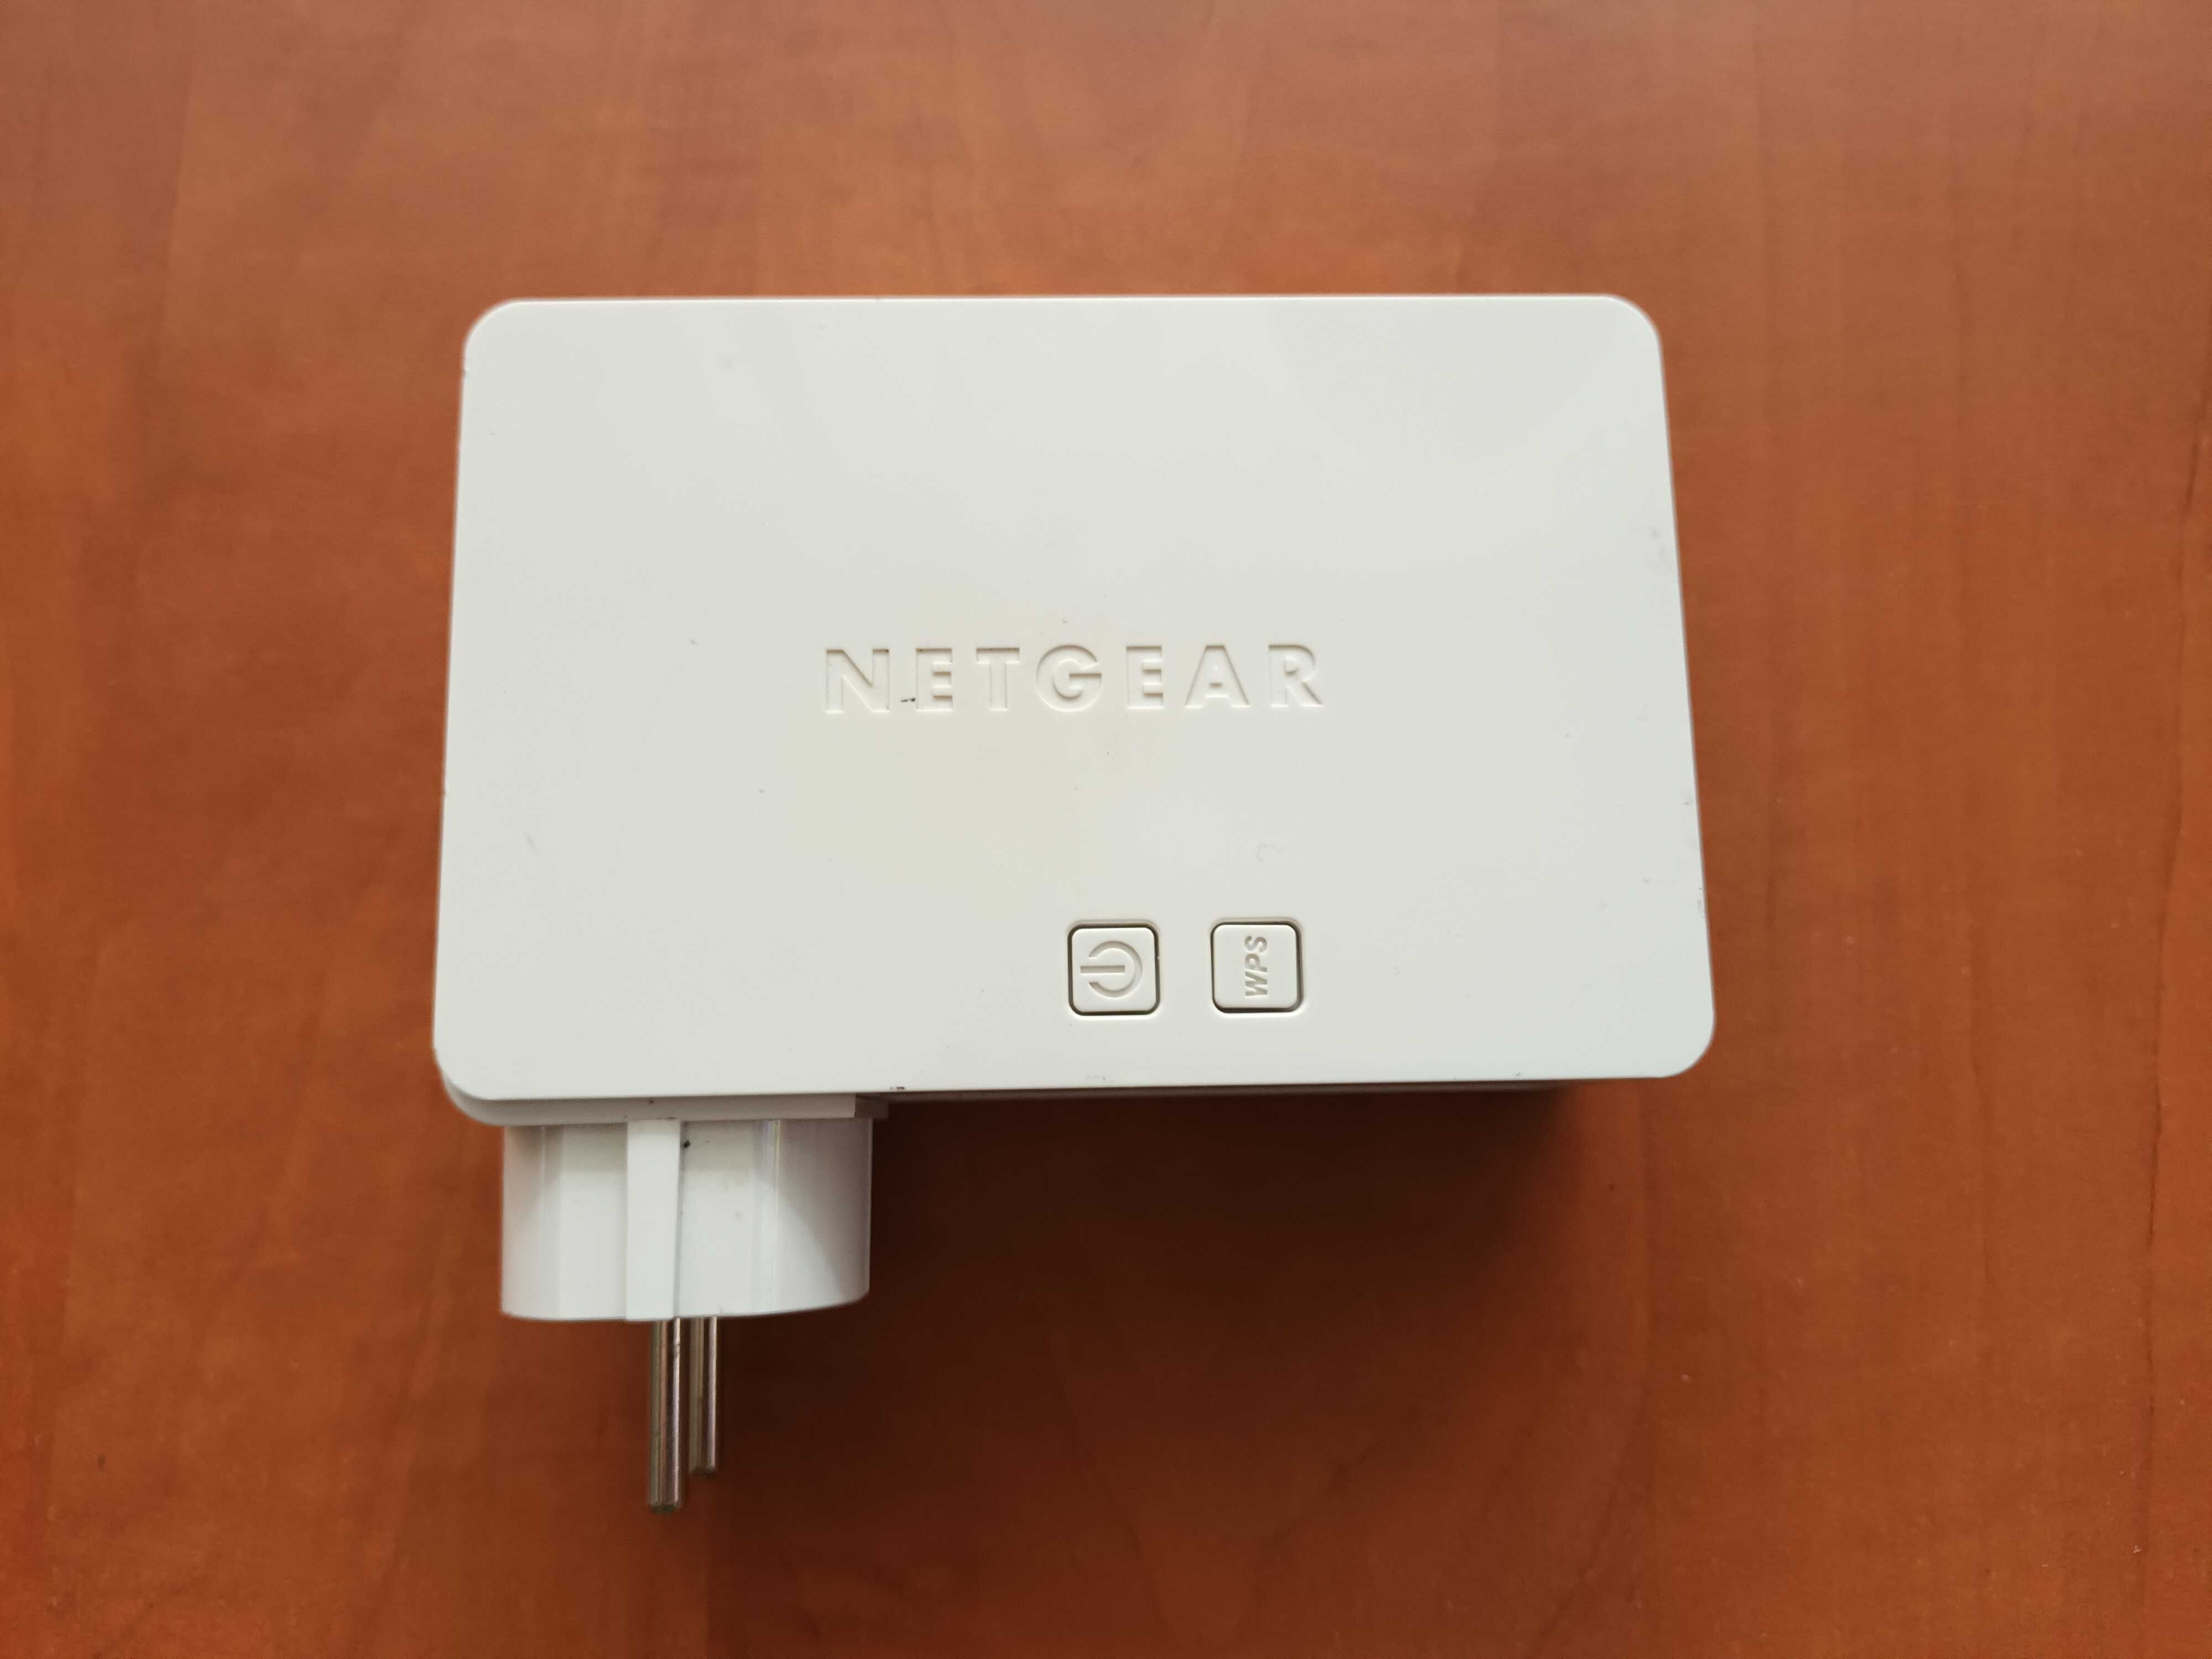 Router Netgear Universal Dual Band WiFi Range Extender WN3500RP N600